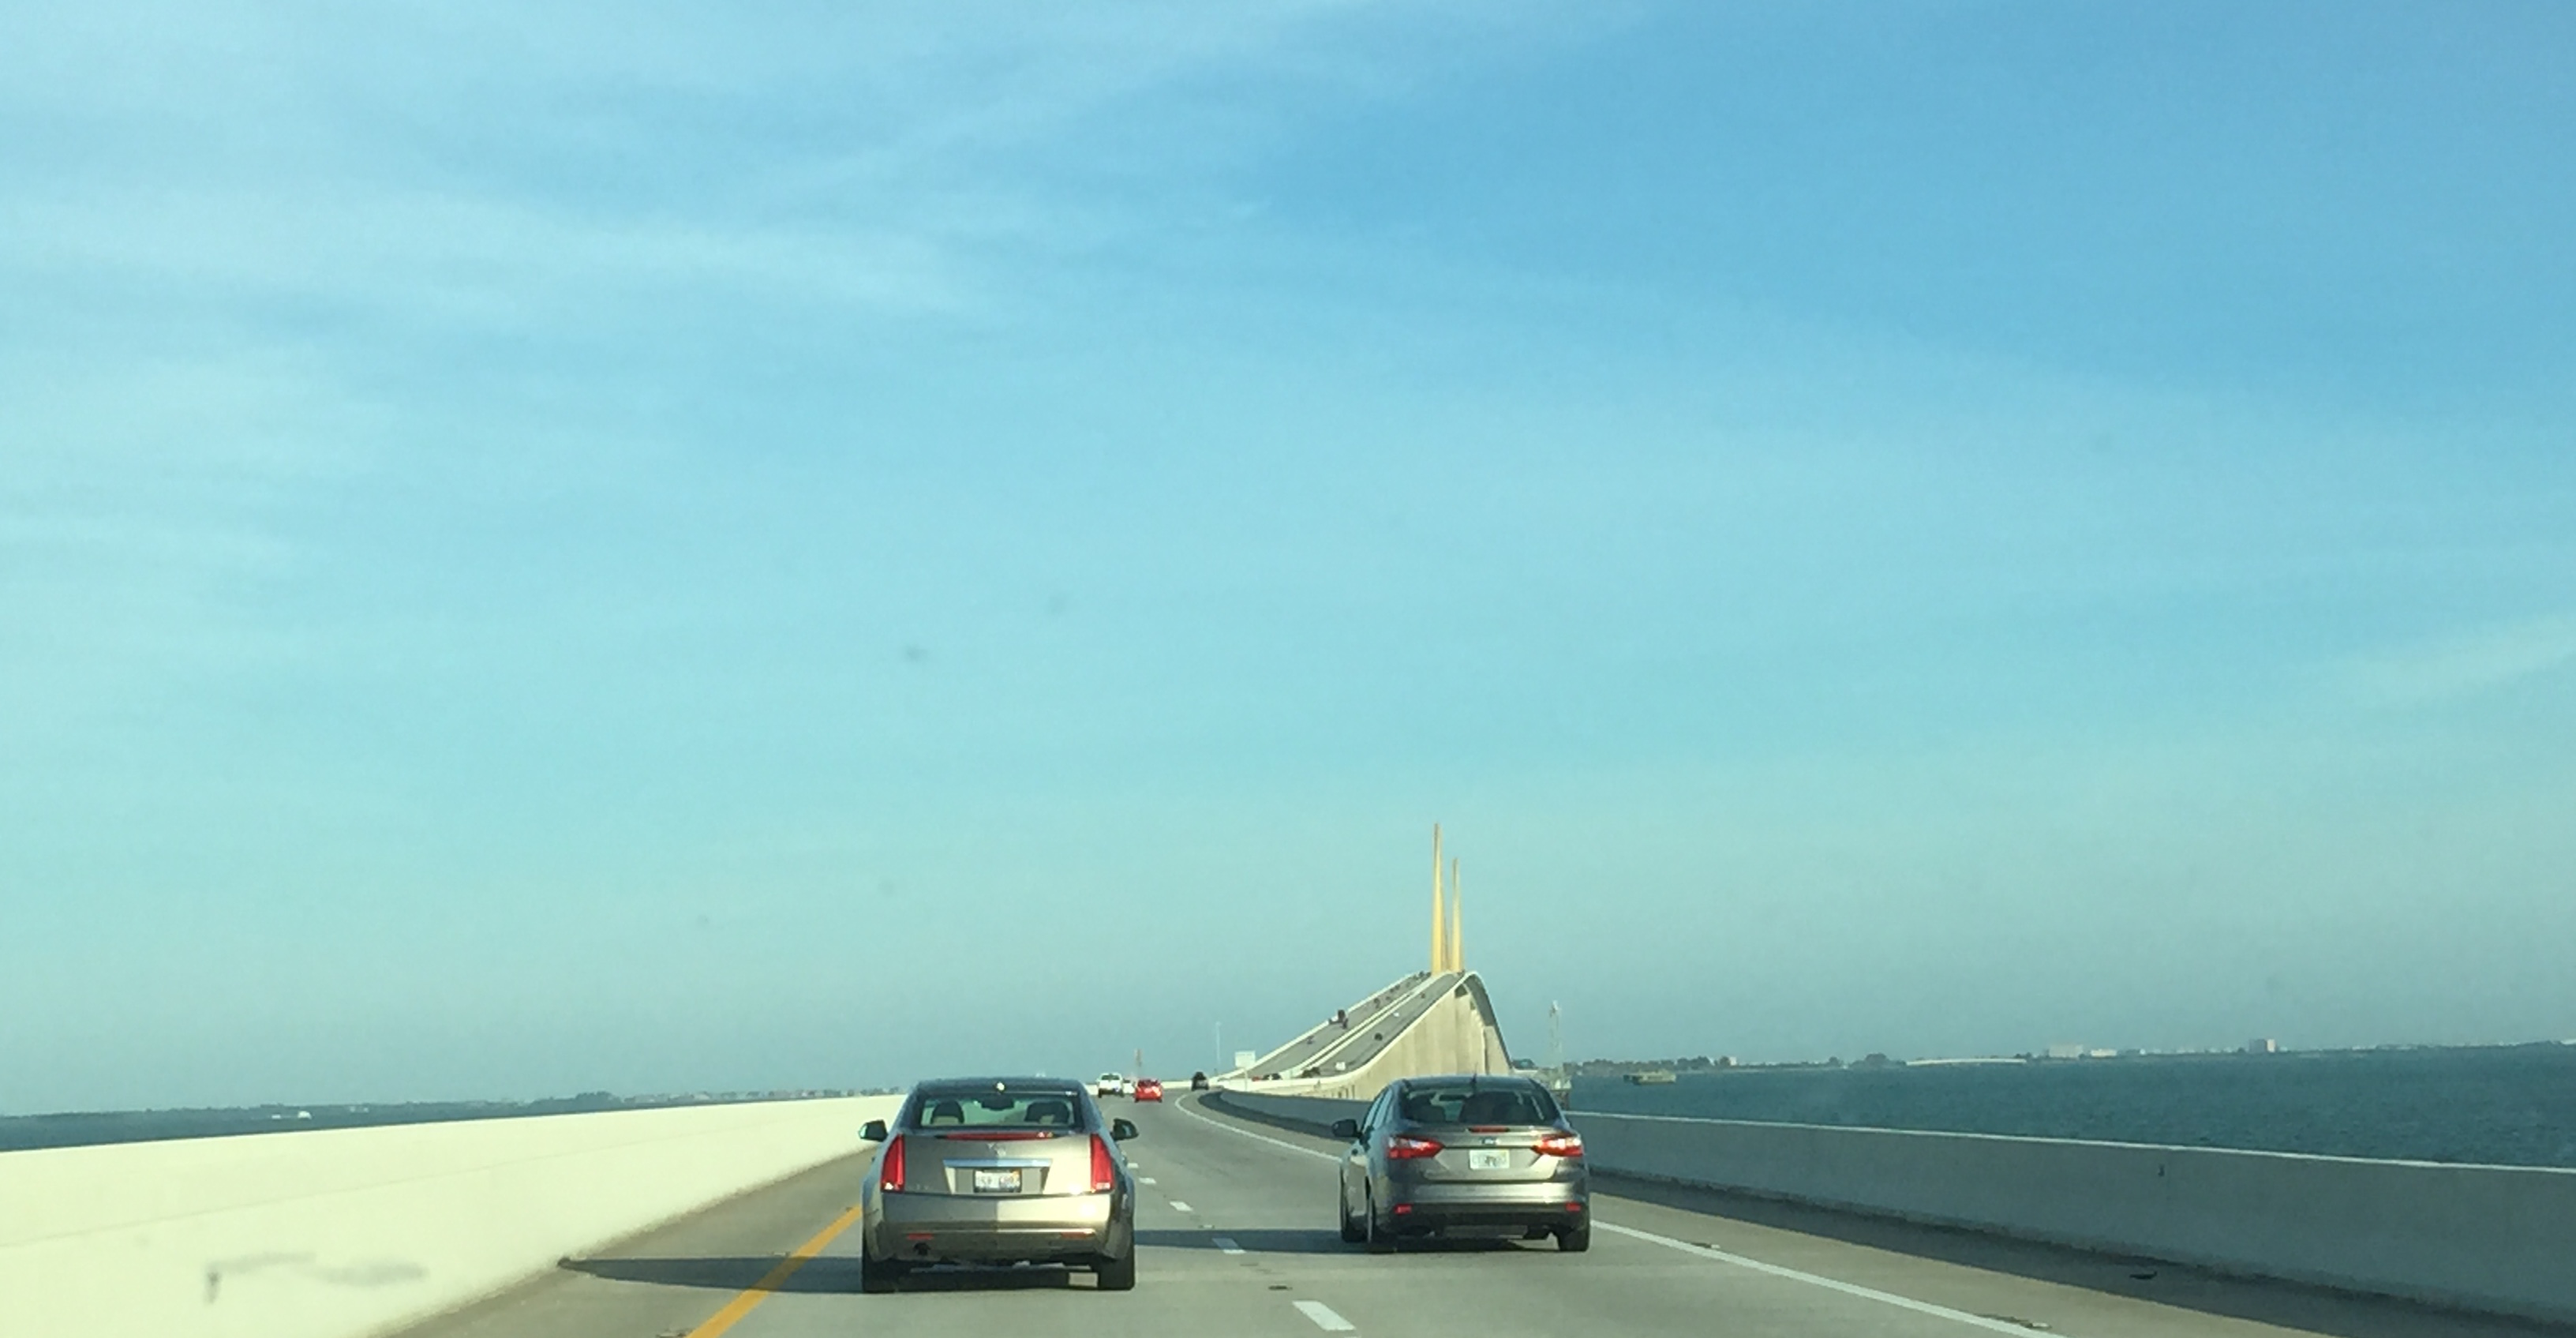 Heading Toward Tampa Bridge